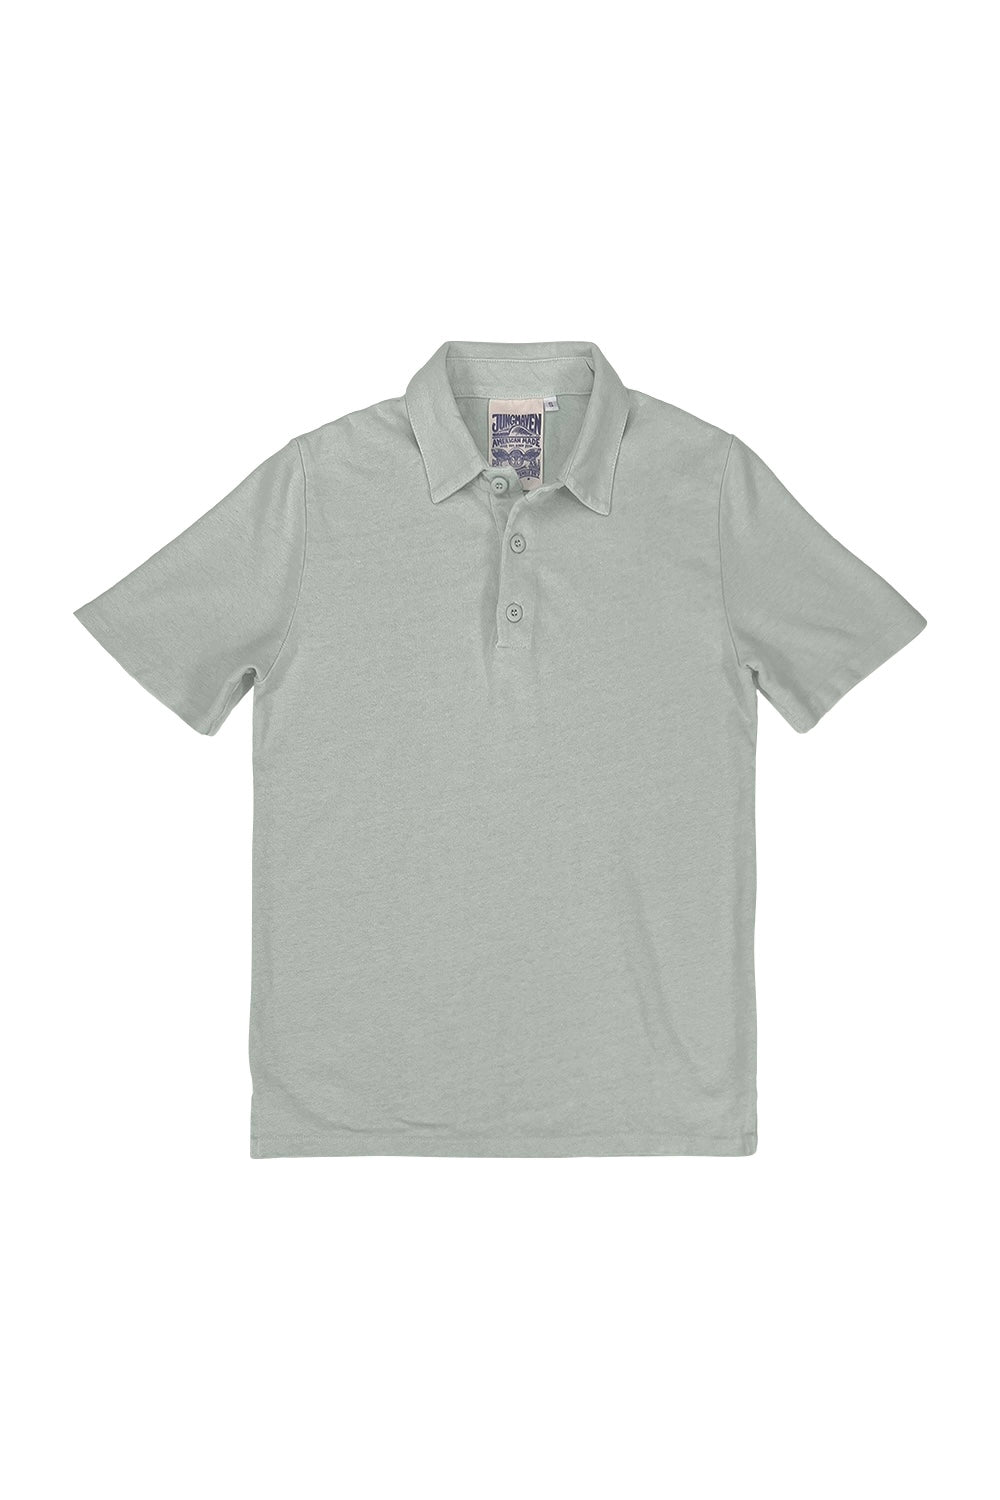 Preston Polo Shirt | Jungmaven Hemp Clothing & Accessories / Color: Seafoam Green